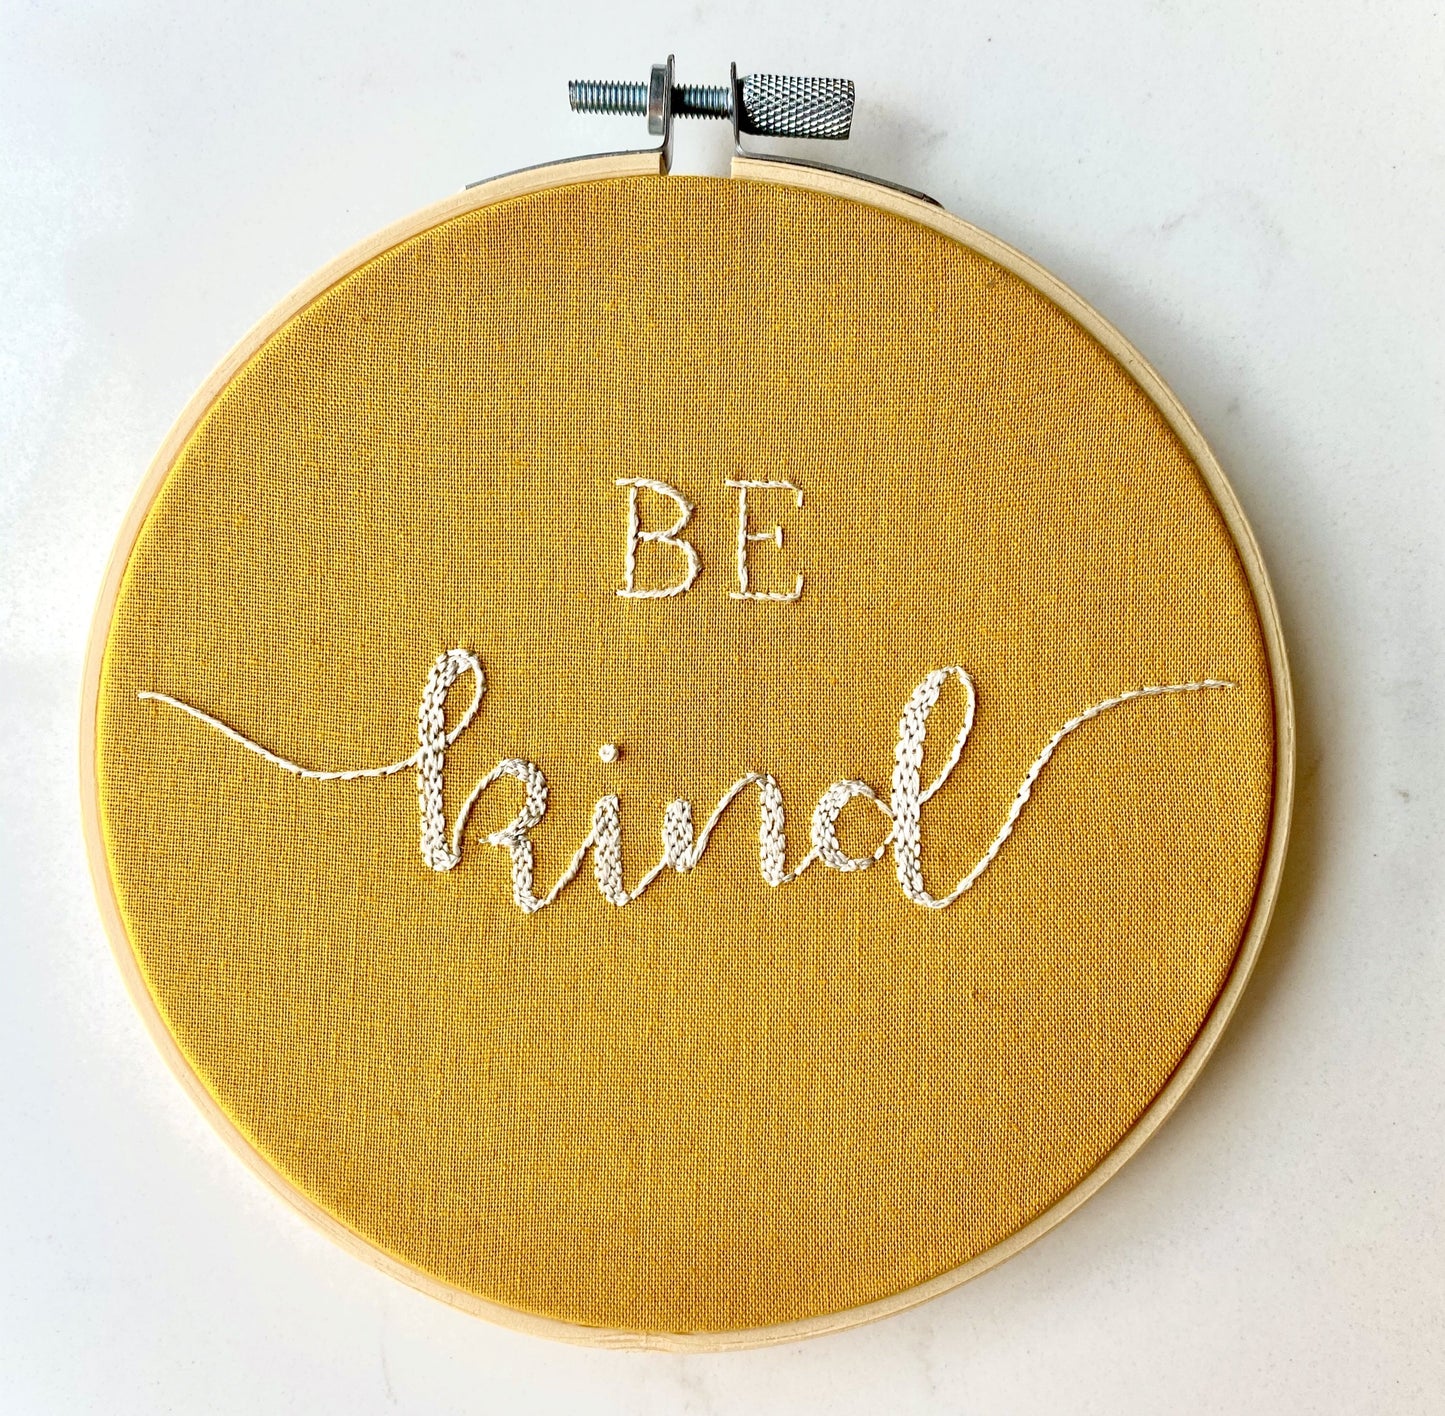 Be Kind - Handmade Embroidery Hoop Art